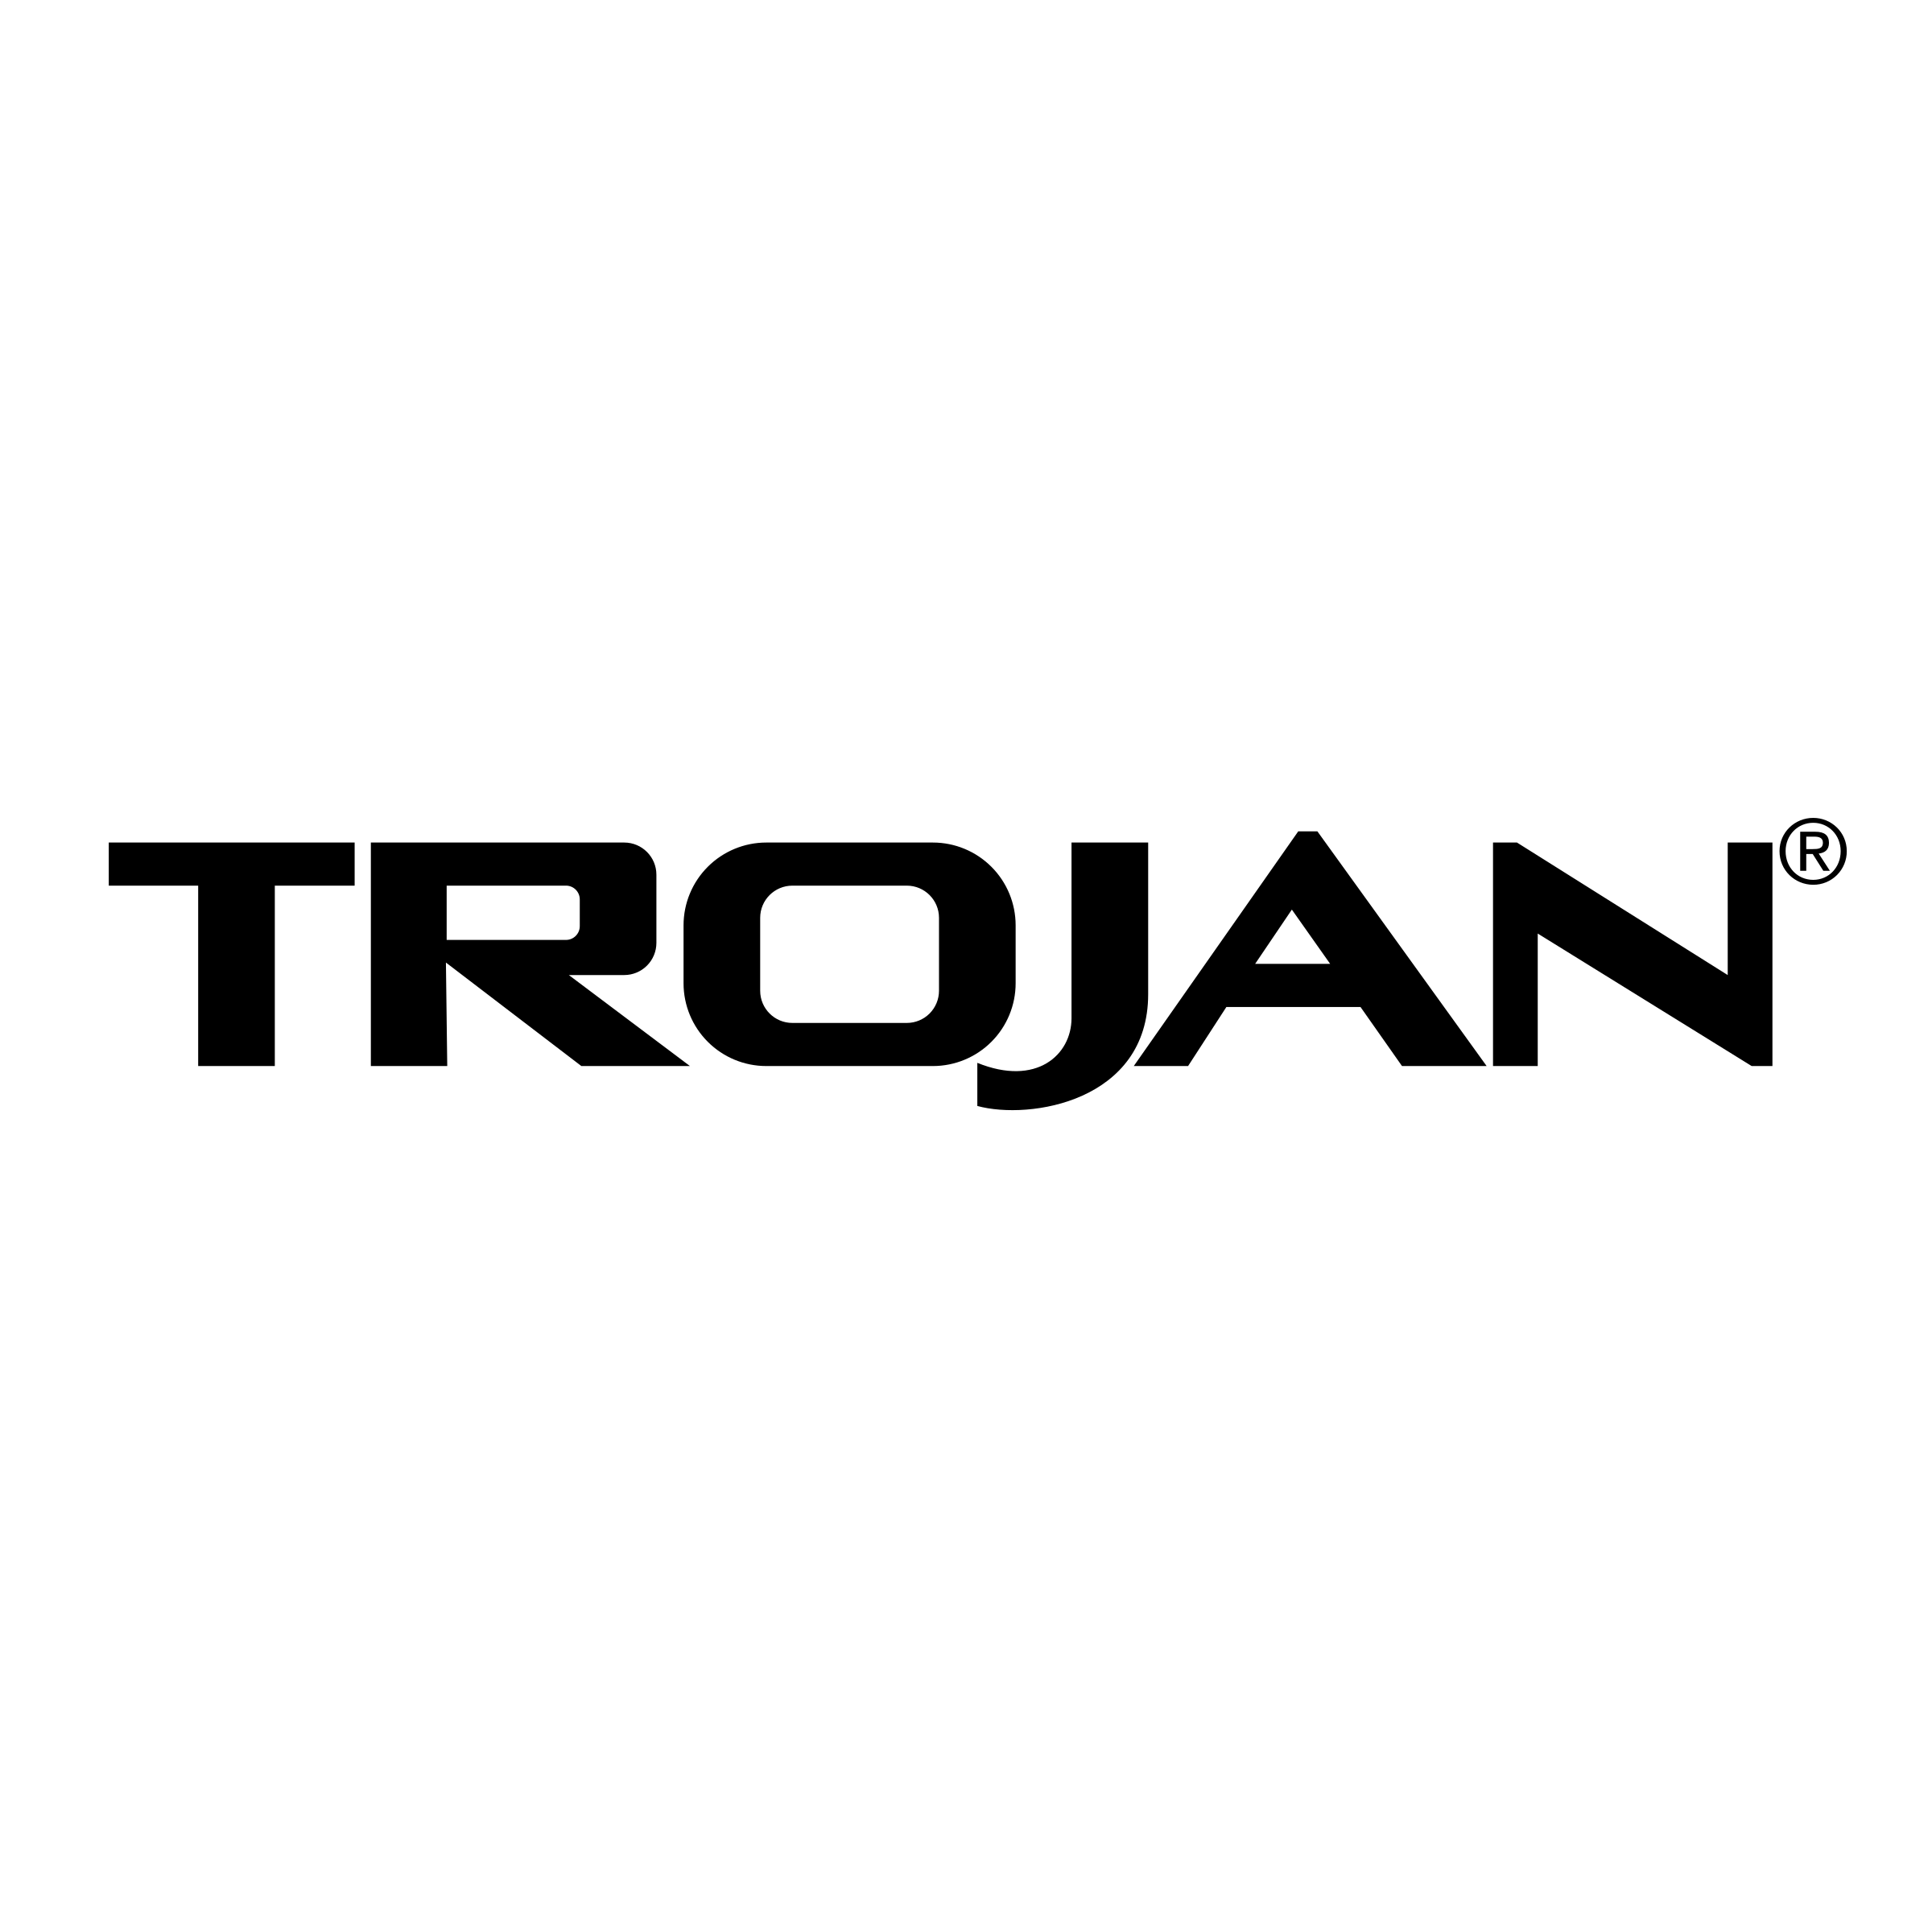 Trojan Logo - Trojan Logo PNG Transparent & SVG Vector - Freebie Supply